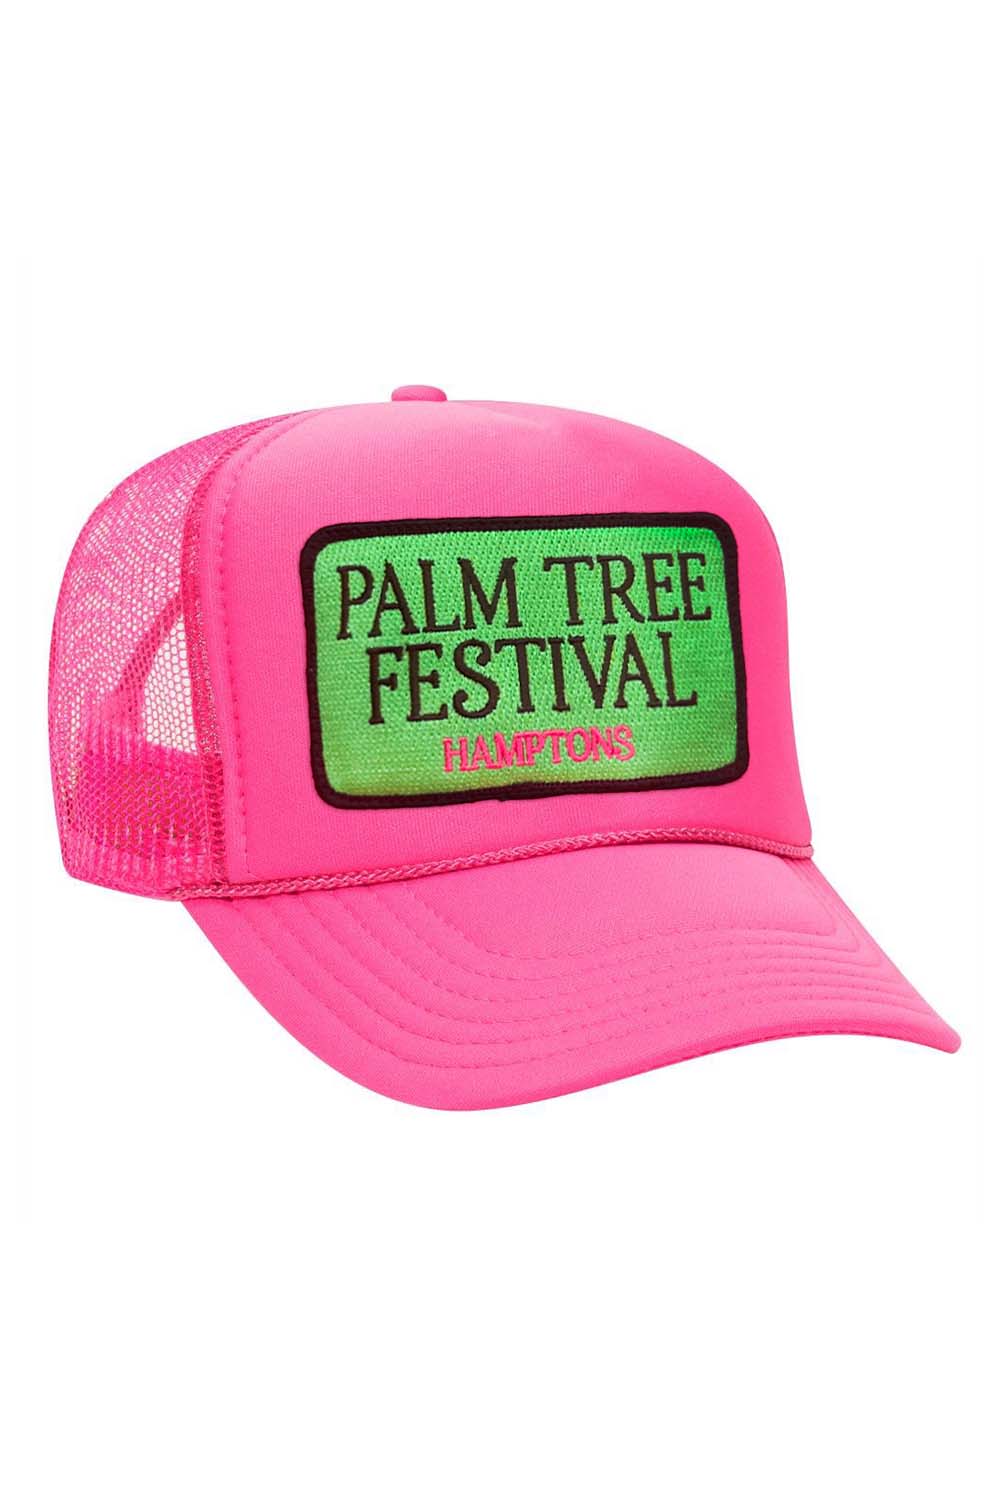 PALM TREE FESTIVAL HAMPTONS 2023 VINTAGE LOW RISE TRUCKER - NEON PINK Aviator Nation 